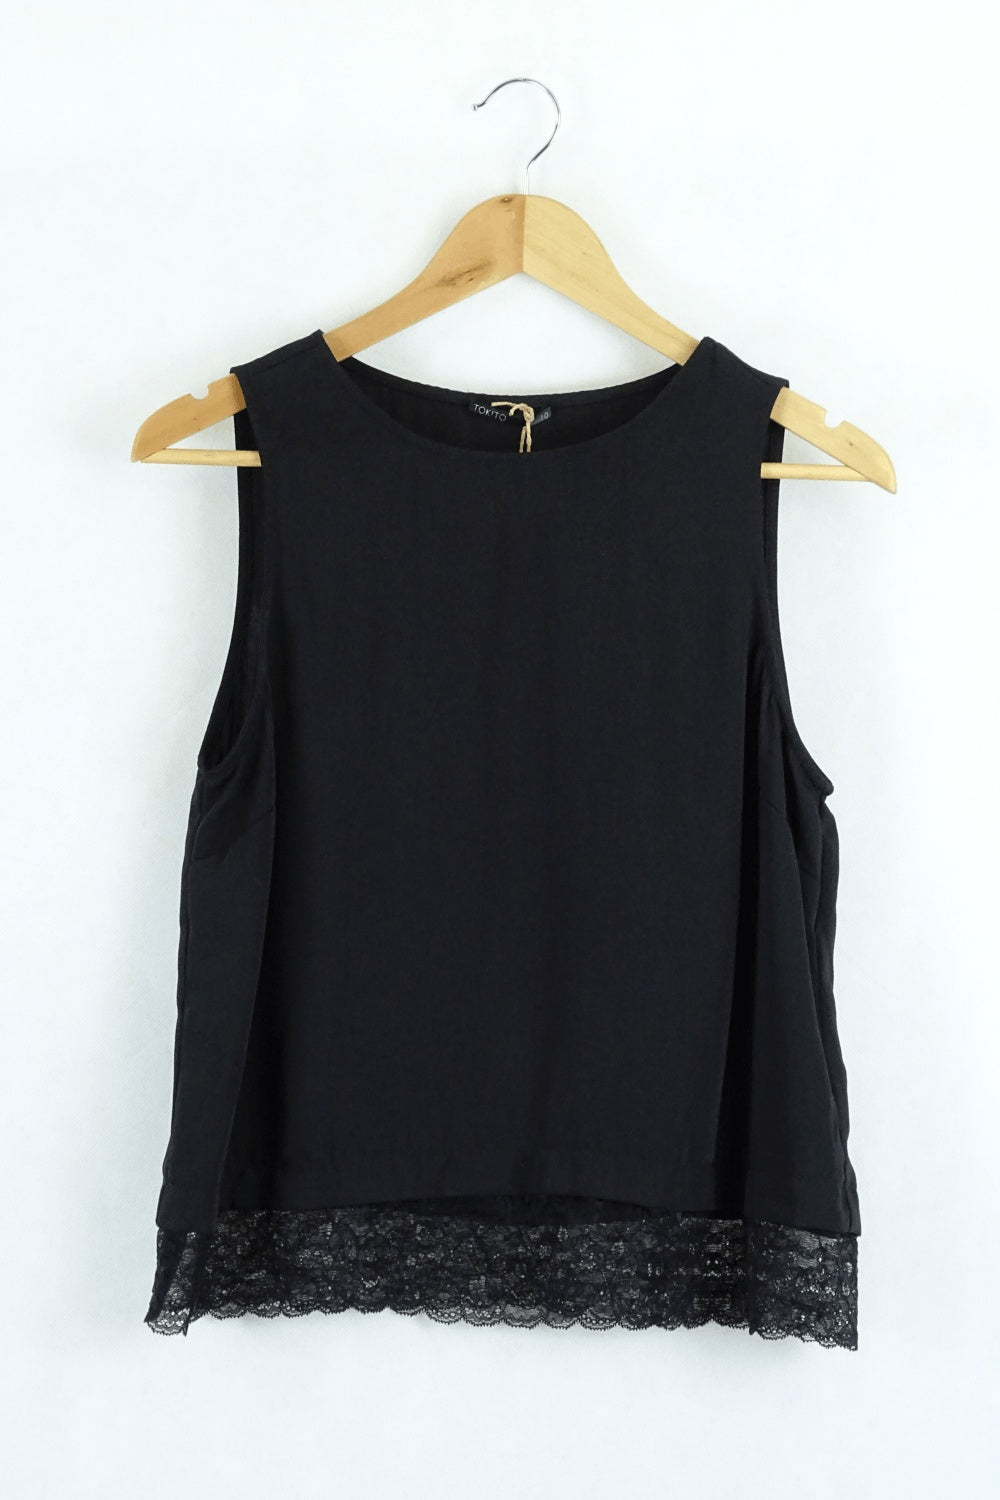 Rockwear Black Long Sleeve Top 14 - Reluv Clothing Australia